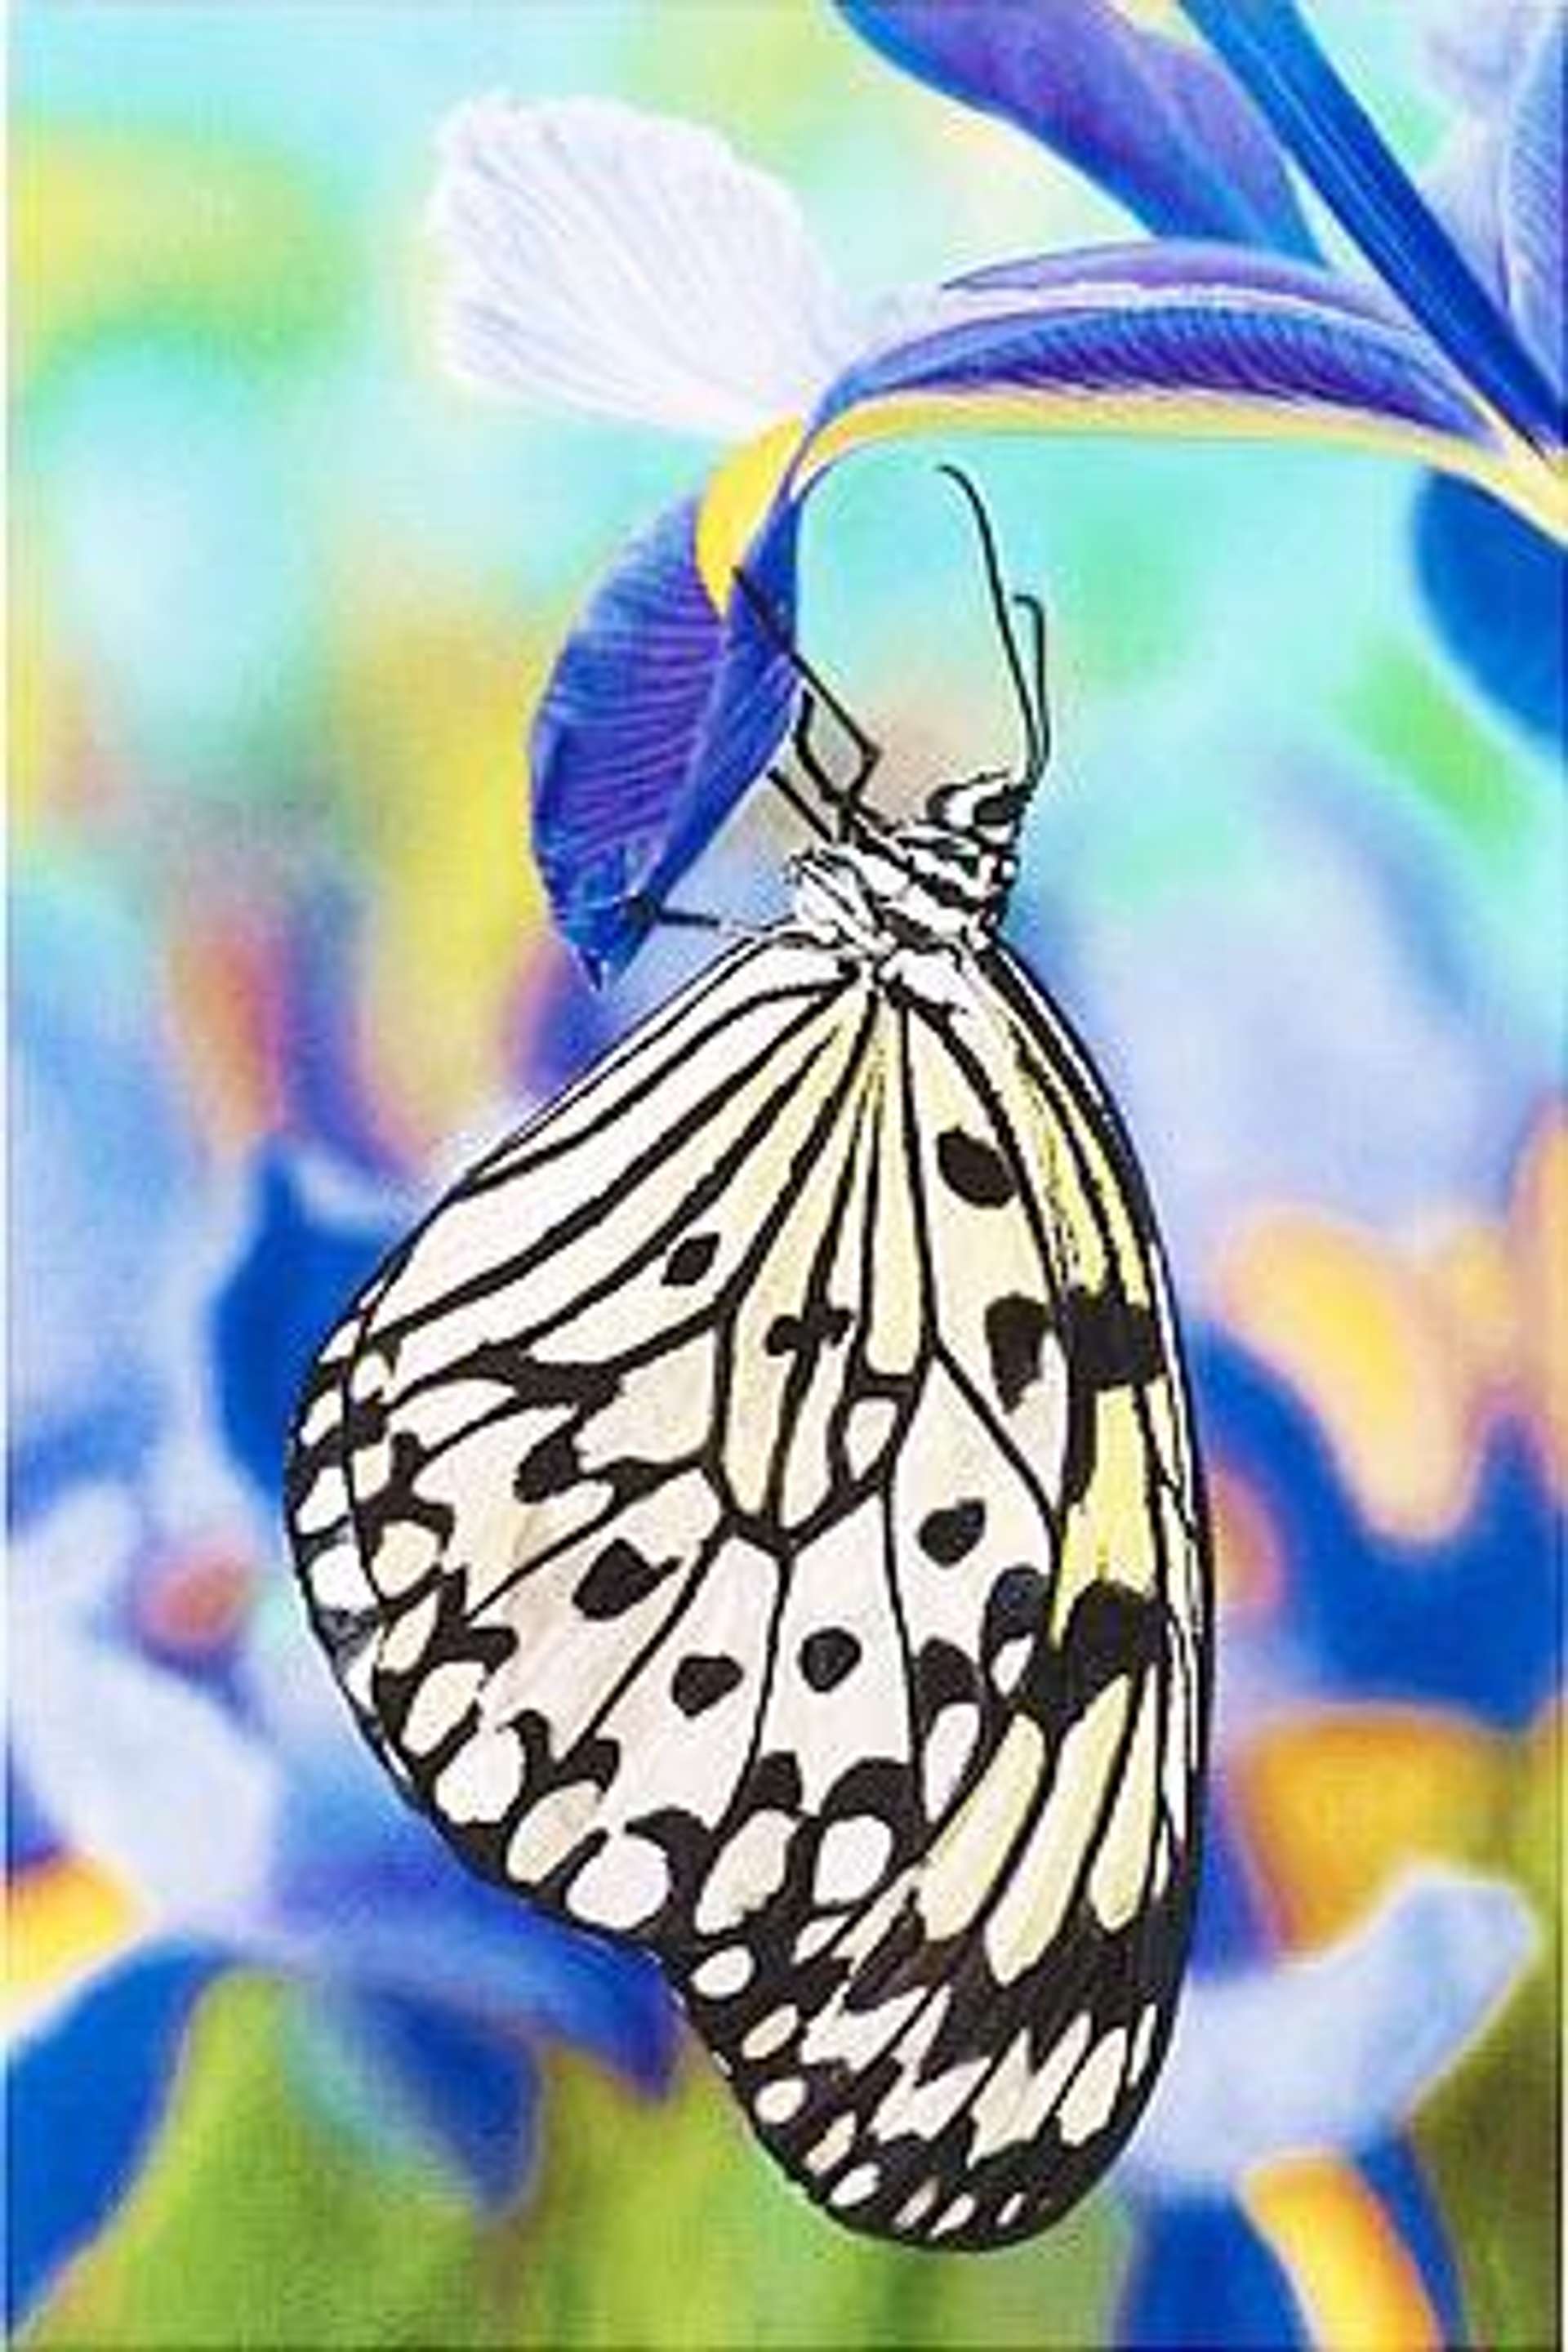 Paper Kite Butterfly On Spanish Iris - Signed Print by Damien Hirst 2011 - MyArtBroker